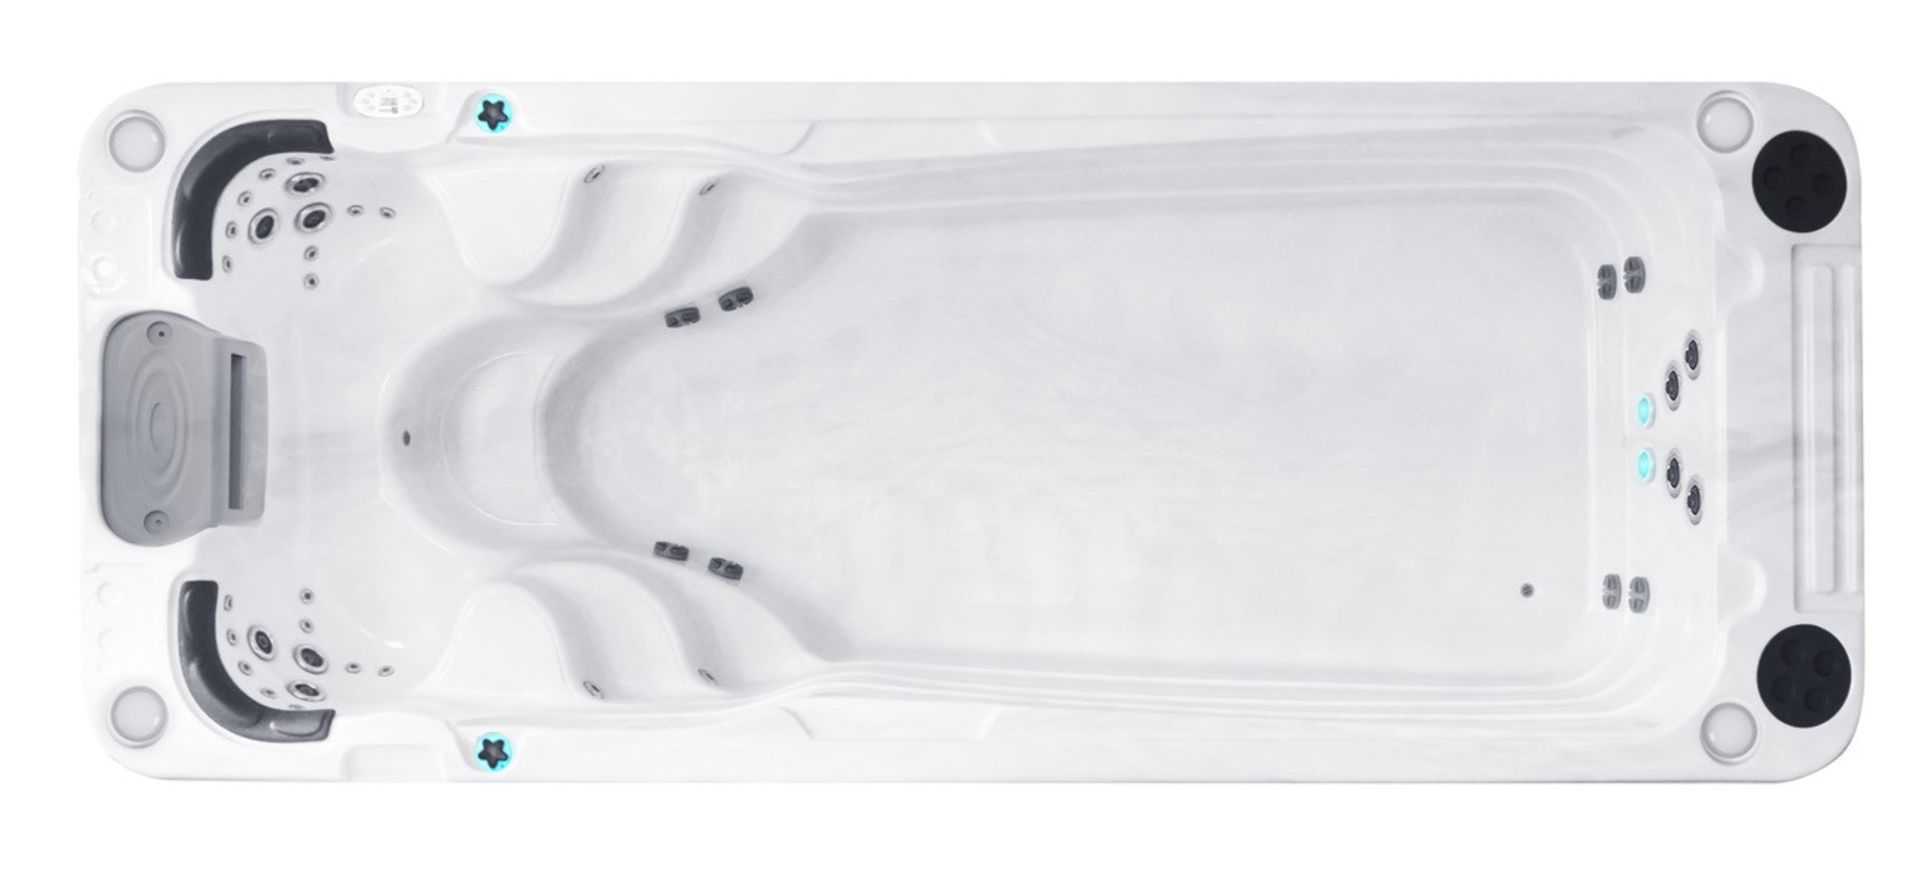 1 x Passion Spa Aquatic 2 Swim Spa - Brand New With Warranty - RRP: £20,500 - CL774 - Location: - Bild 4 aus 4